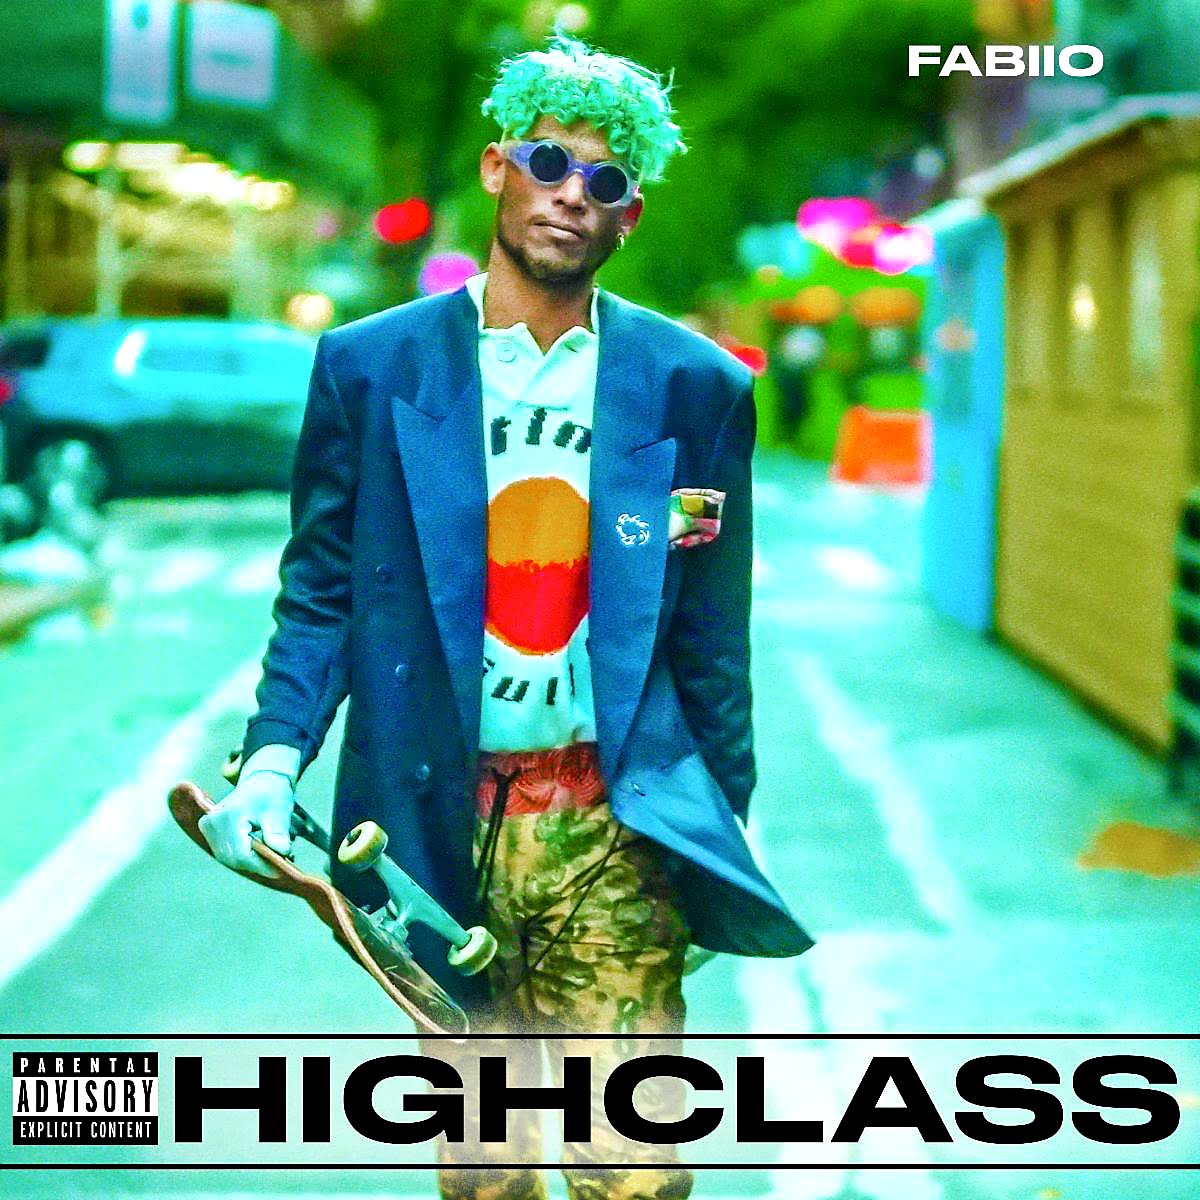 Fabiio's High Class via NV Marketing for use by 360 Magazine